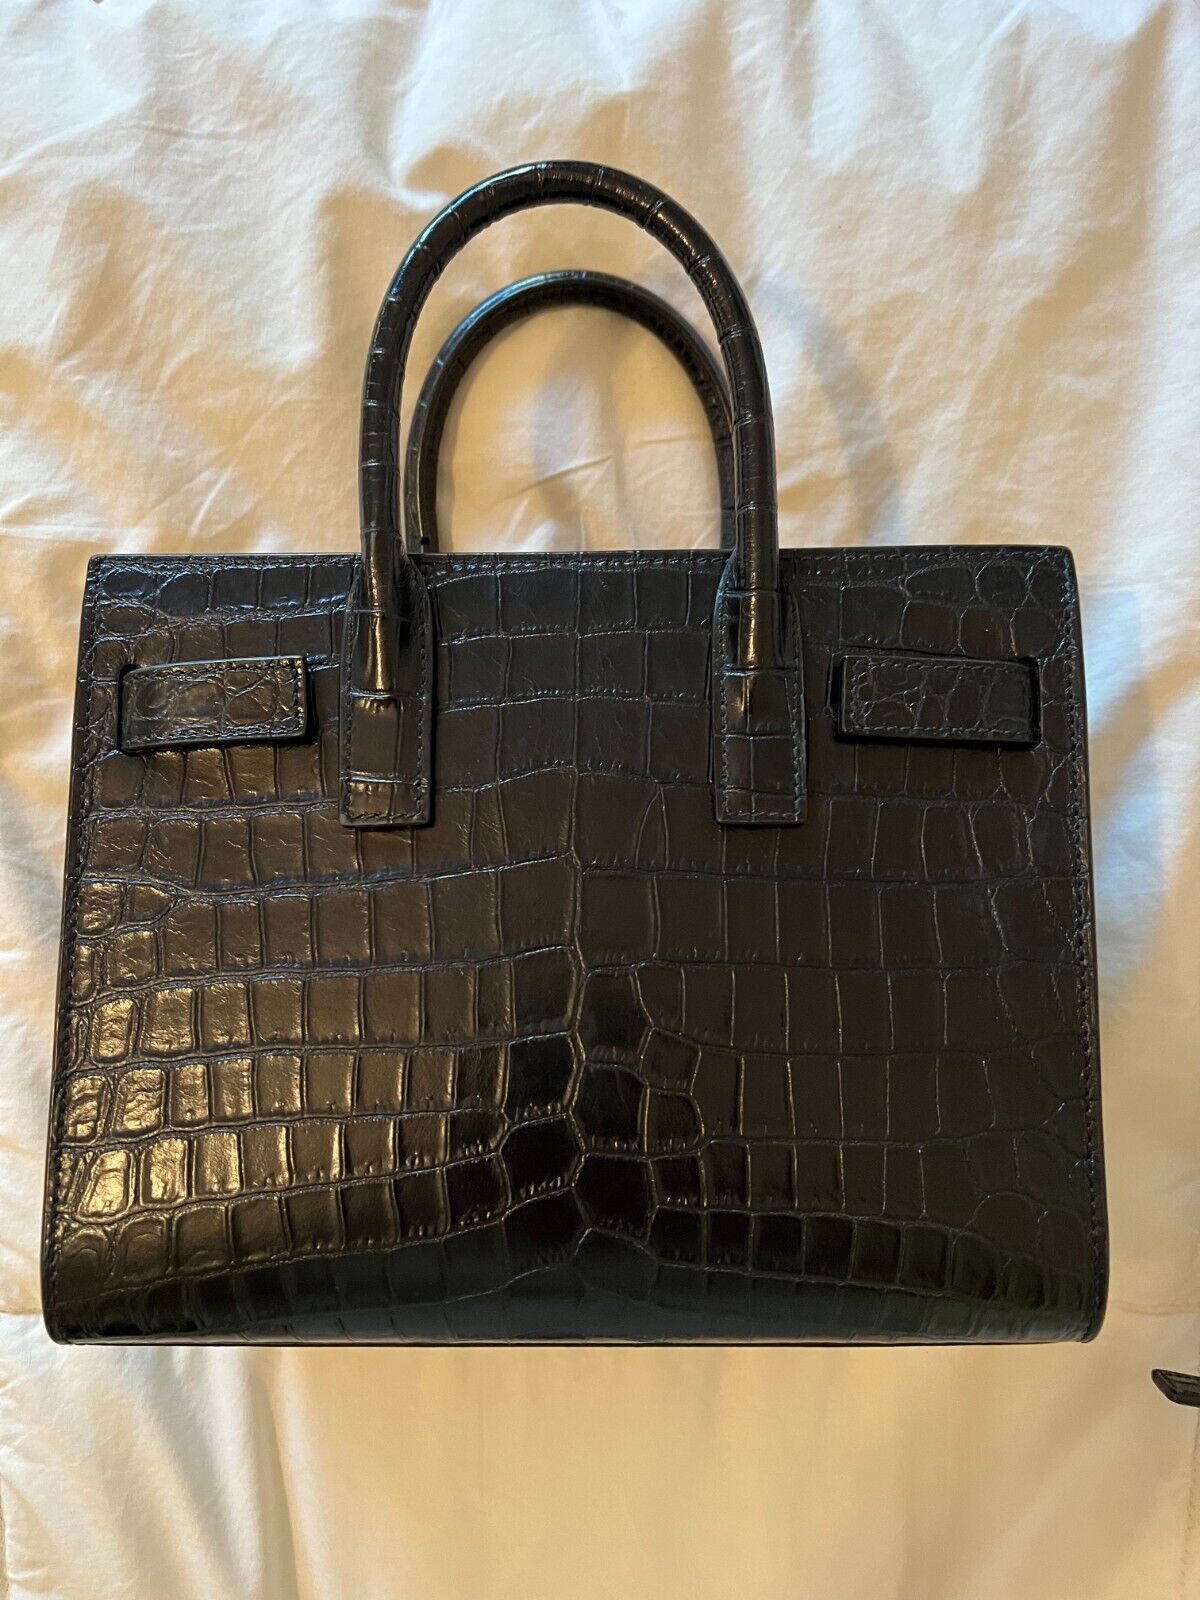 ysl handbag authentic used - image 3